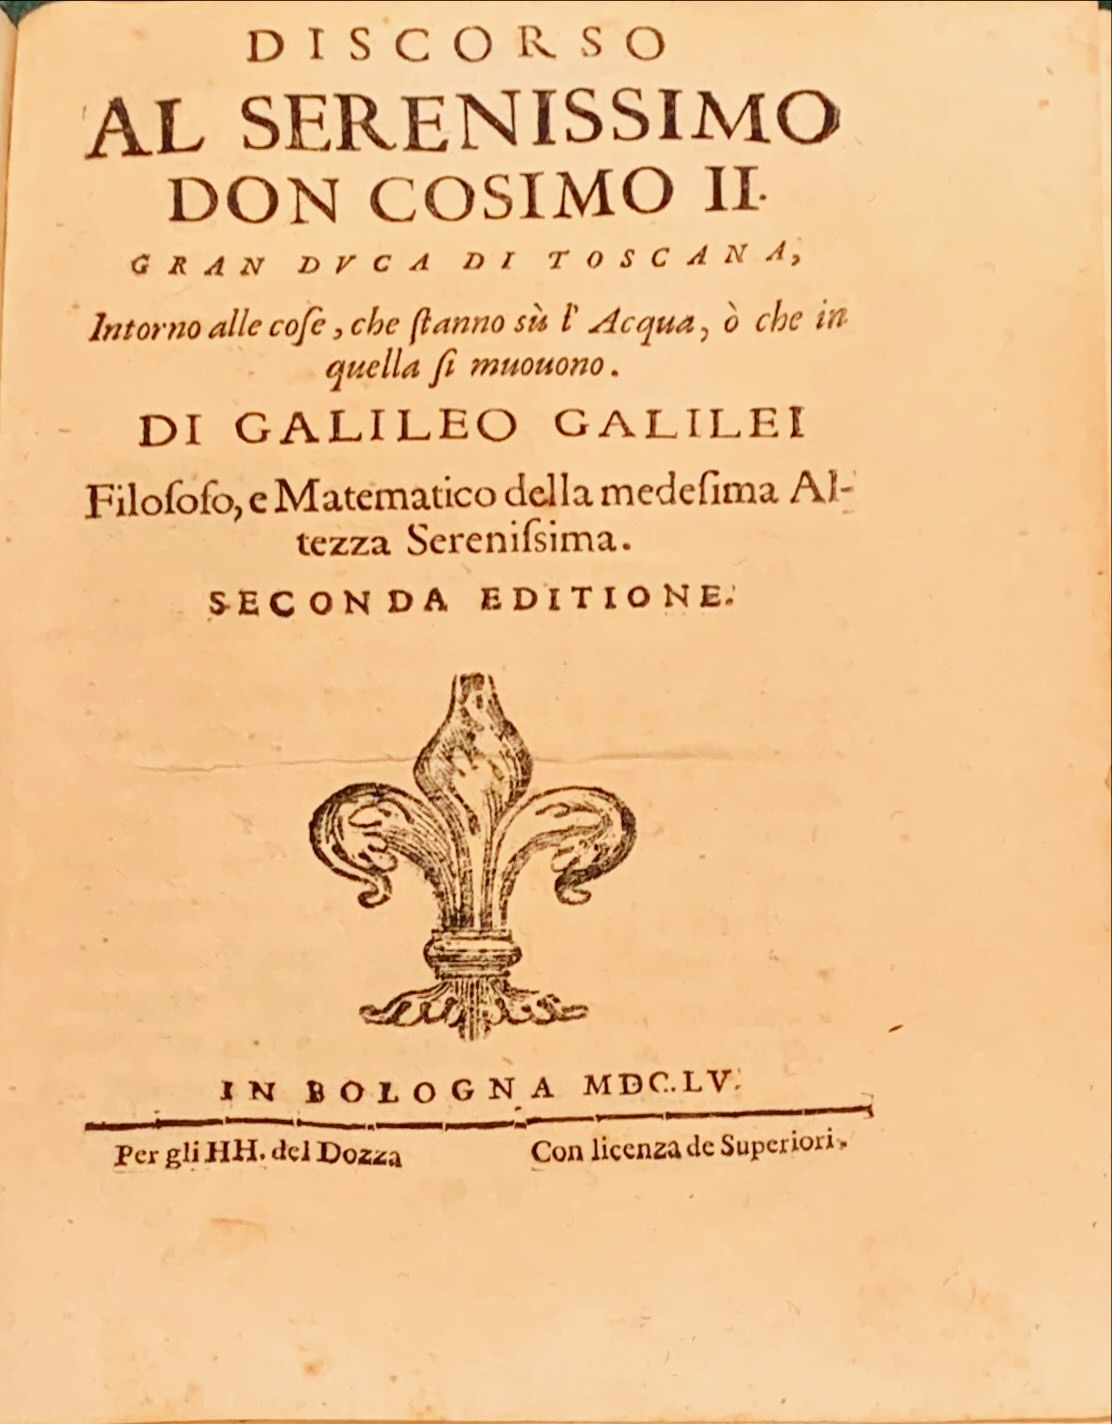 Galileo Galilei: DISCORSO AL SERENISSIMO DON COSIMO II. GRAN DUCA DI TOSCANA